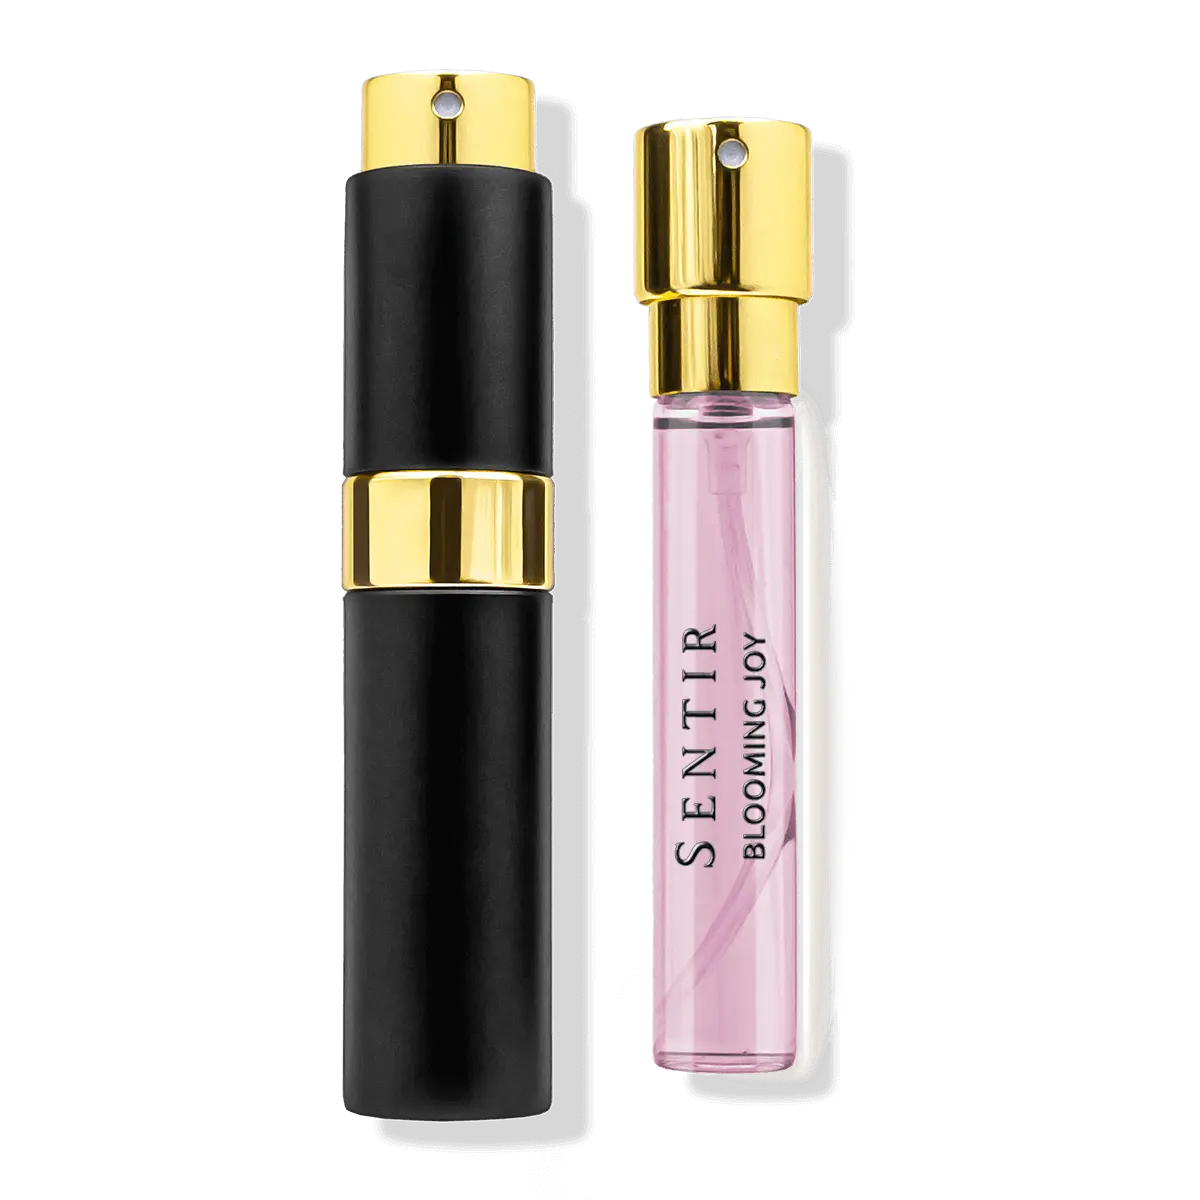 Chanel Chance Eau Tendre Impression ➔ Blooming Joy – Sentir Parfum